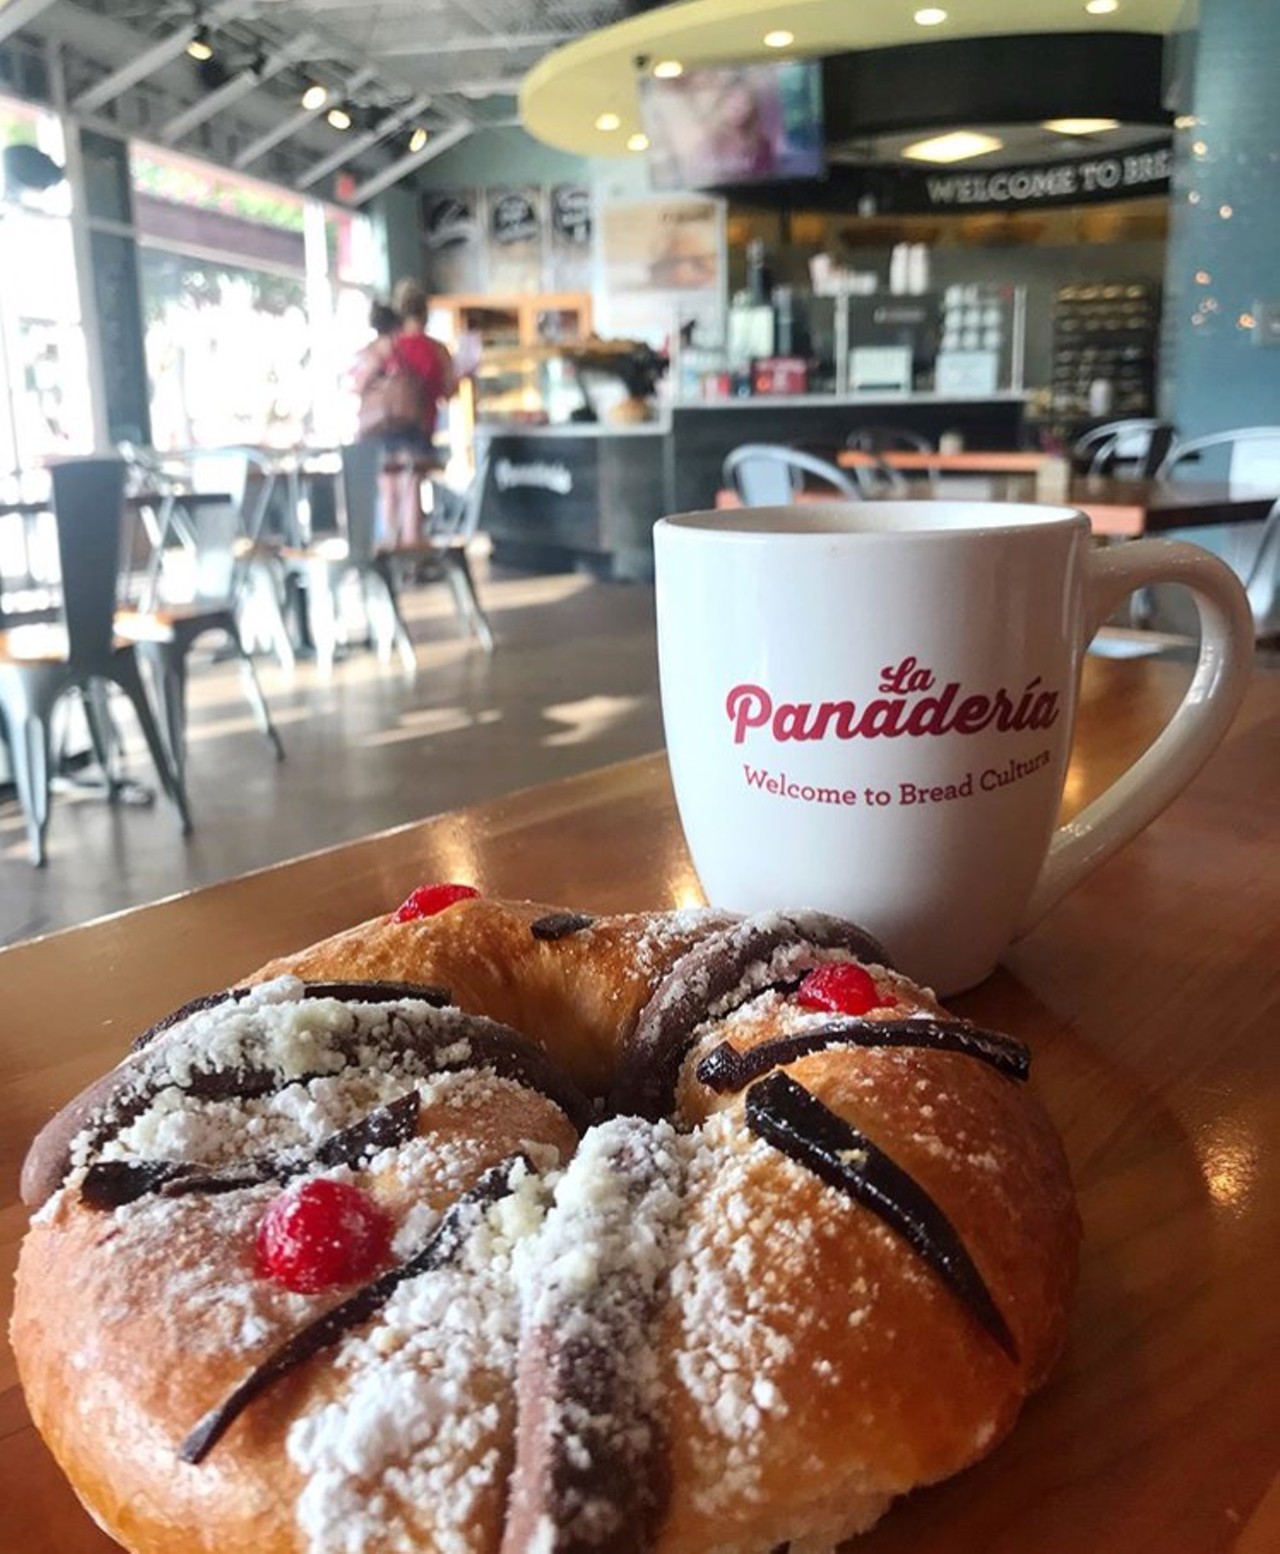 Best Pan Dulce
La Panaderia, multiple locations, lapanaderia.com
Photo via Instagram / sanantoniofoodlover